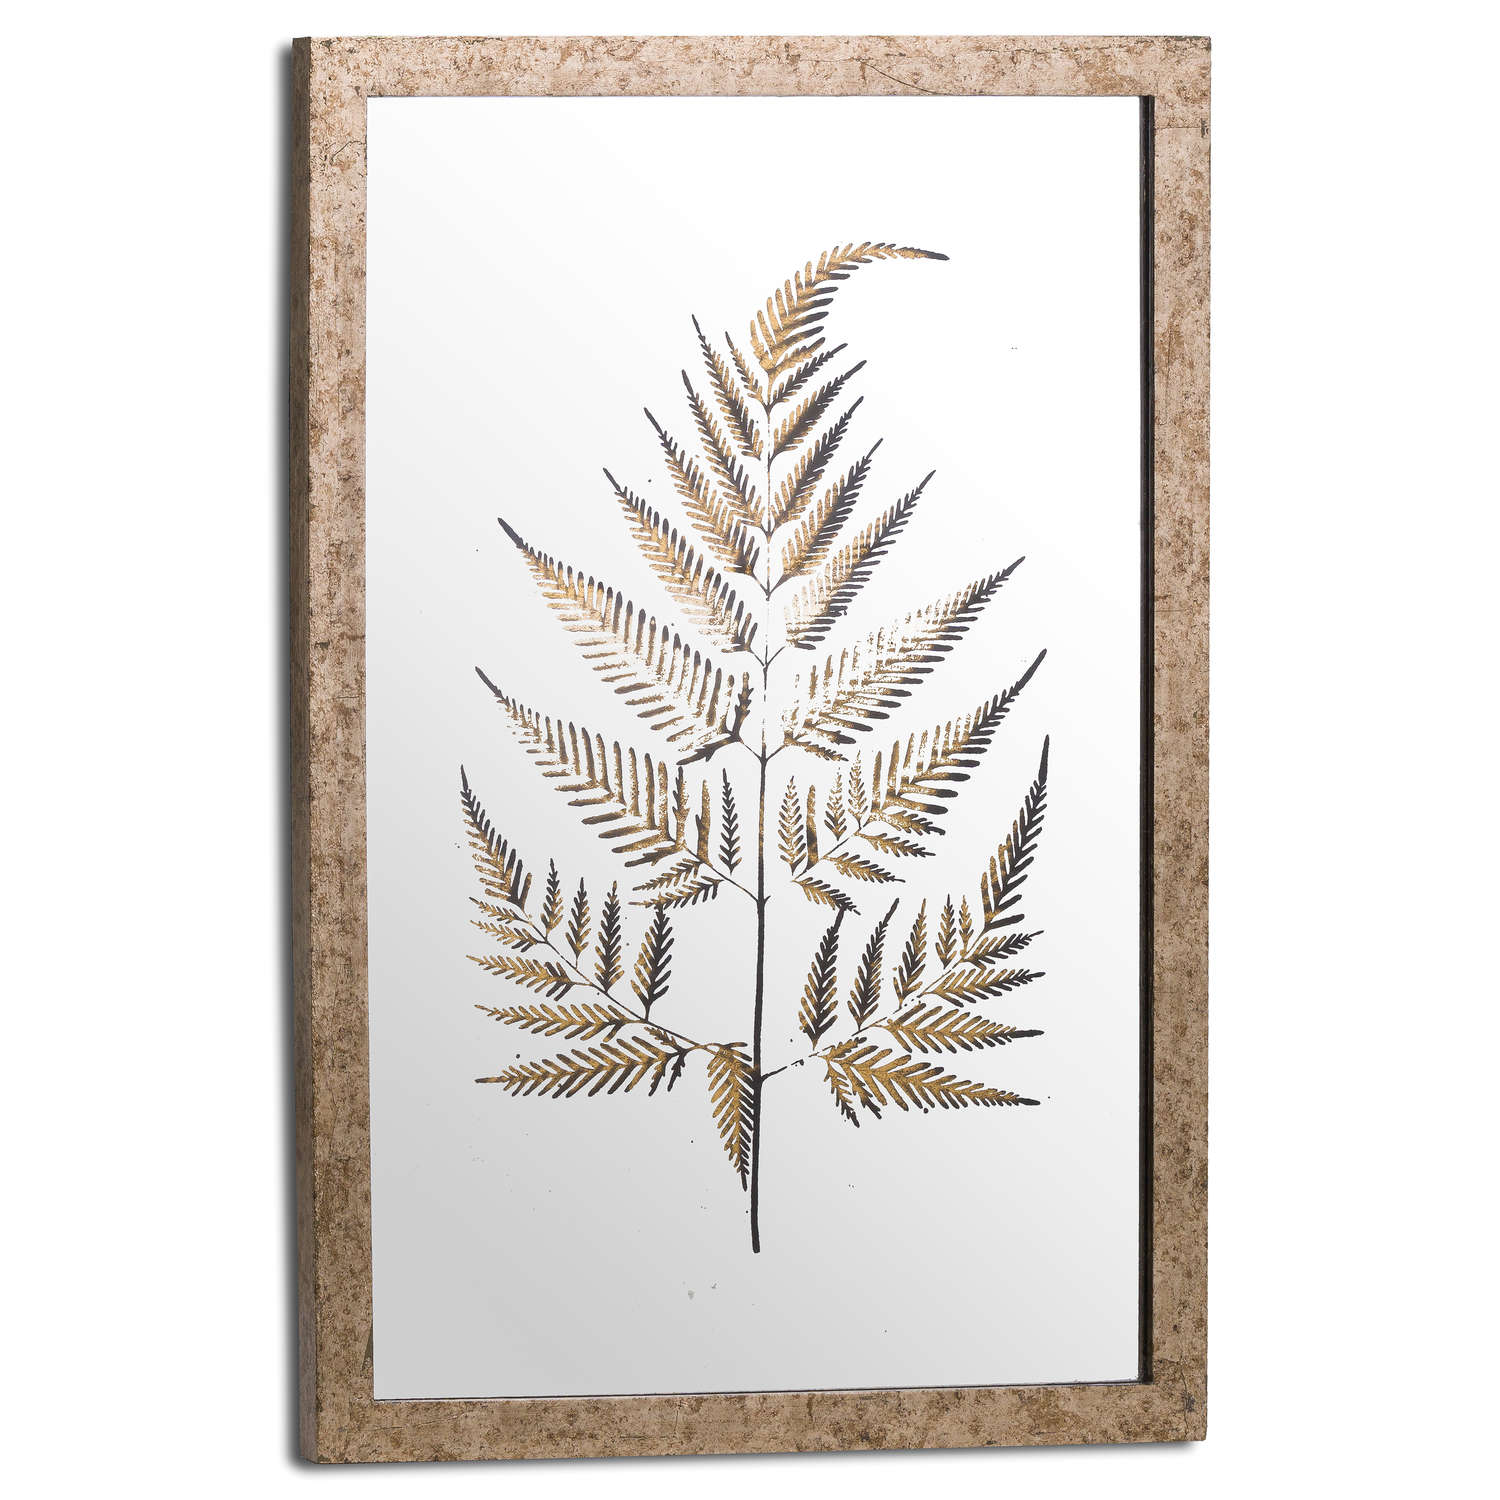 Metallic Mirrored Brass Fern Wall Art - Image 1